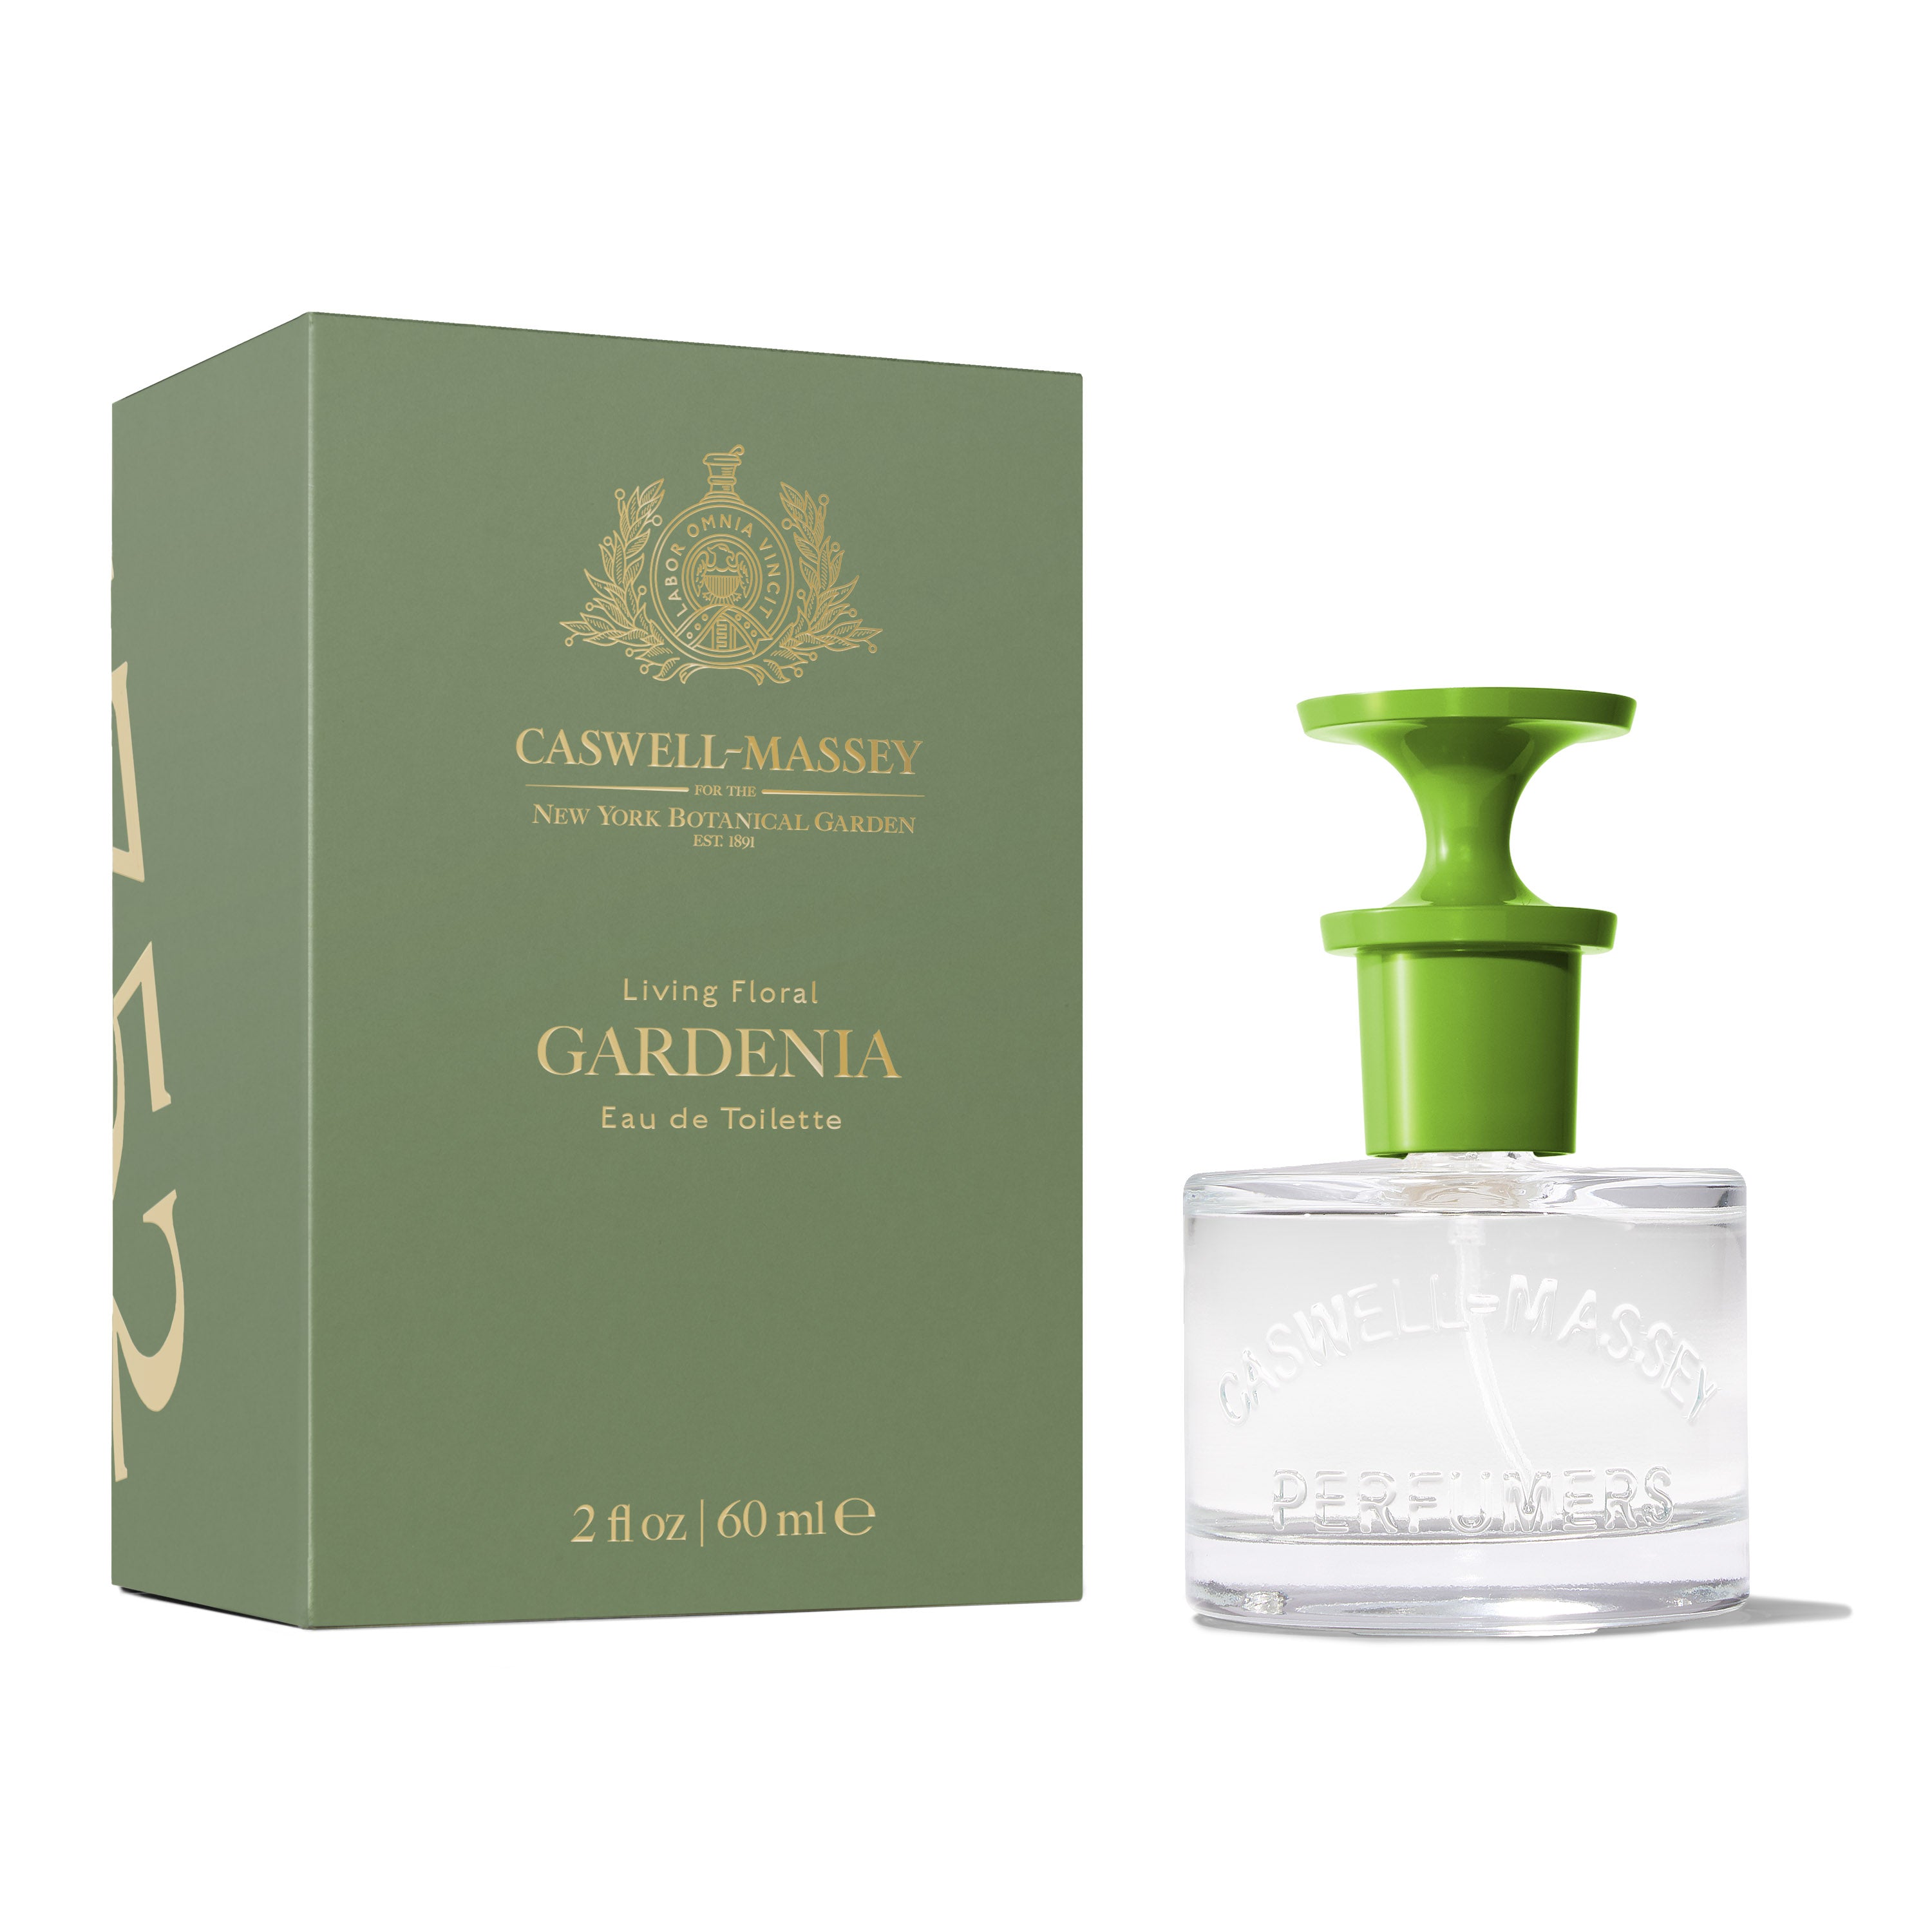 Gardenia Eau de Toilette, Fine Fragrance by Caswell-Massey 60mL Full Size, shown next to pale green box